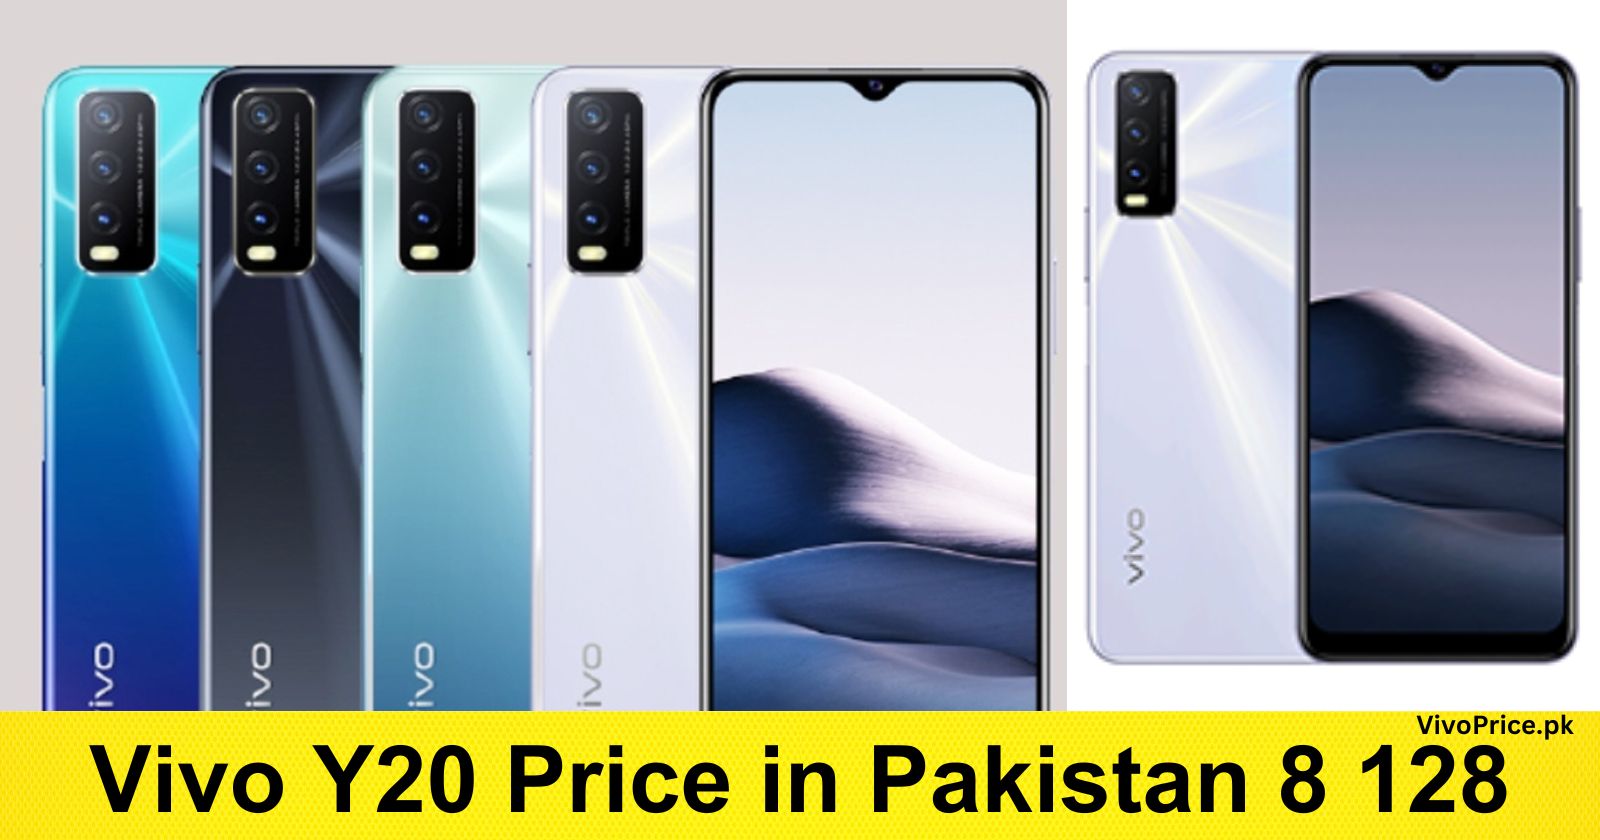 Vivo Y20 Price in Pakistan 8 128 | VivoPrice.pk